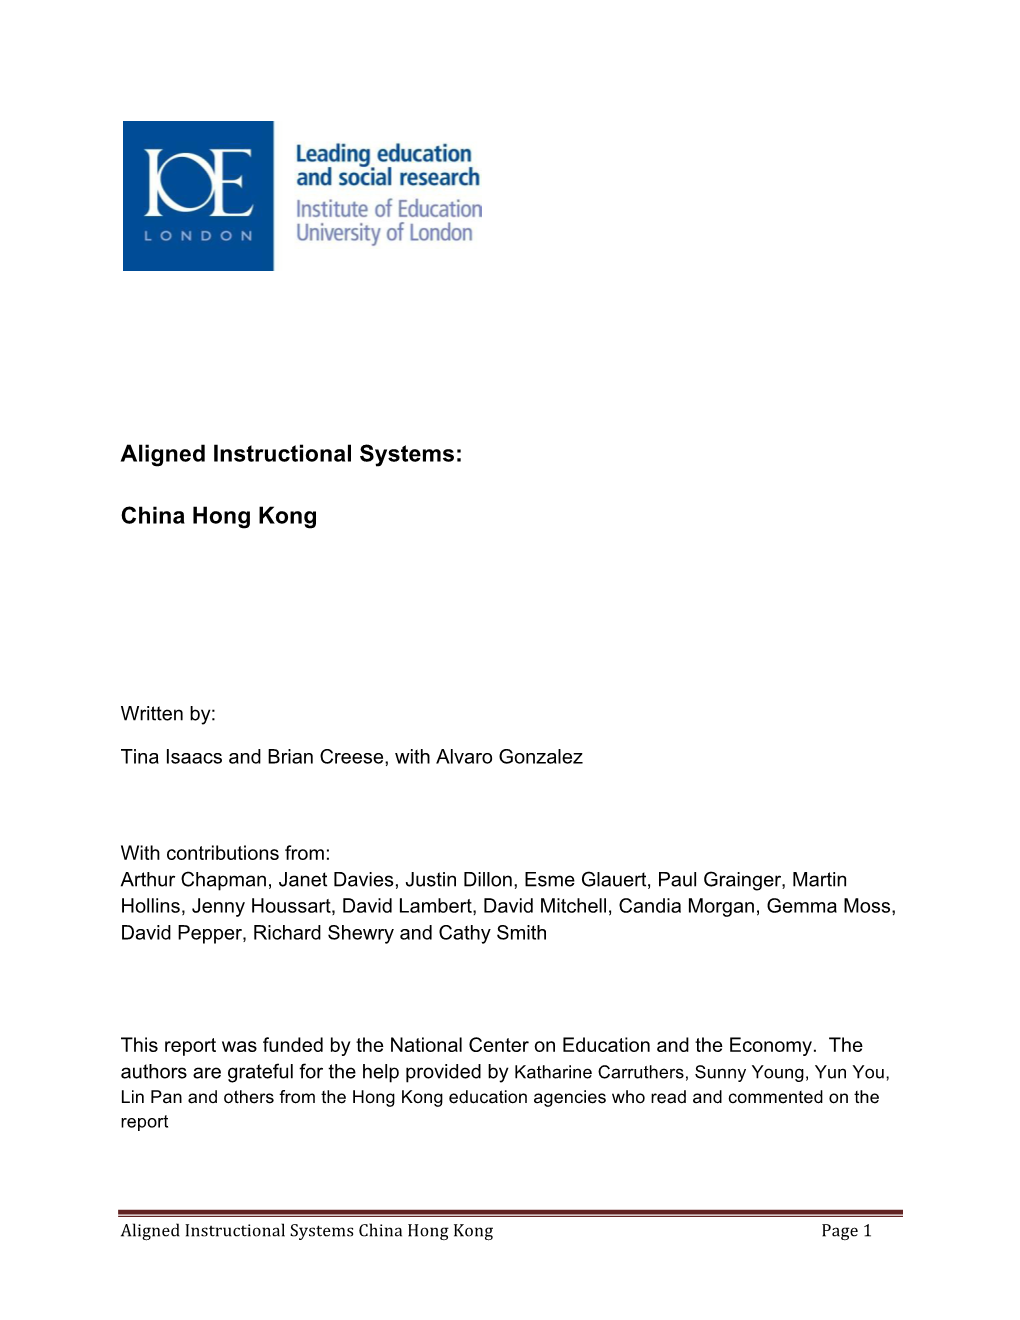 Aligned Instructional Systems China Hong Kong Page 1